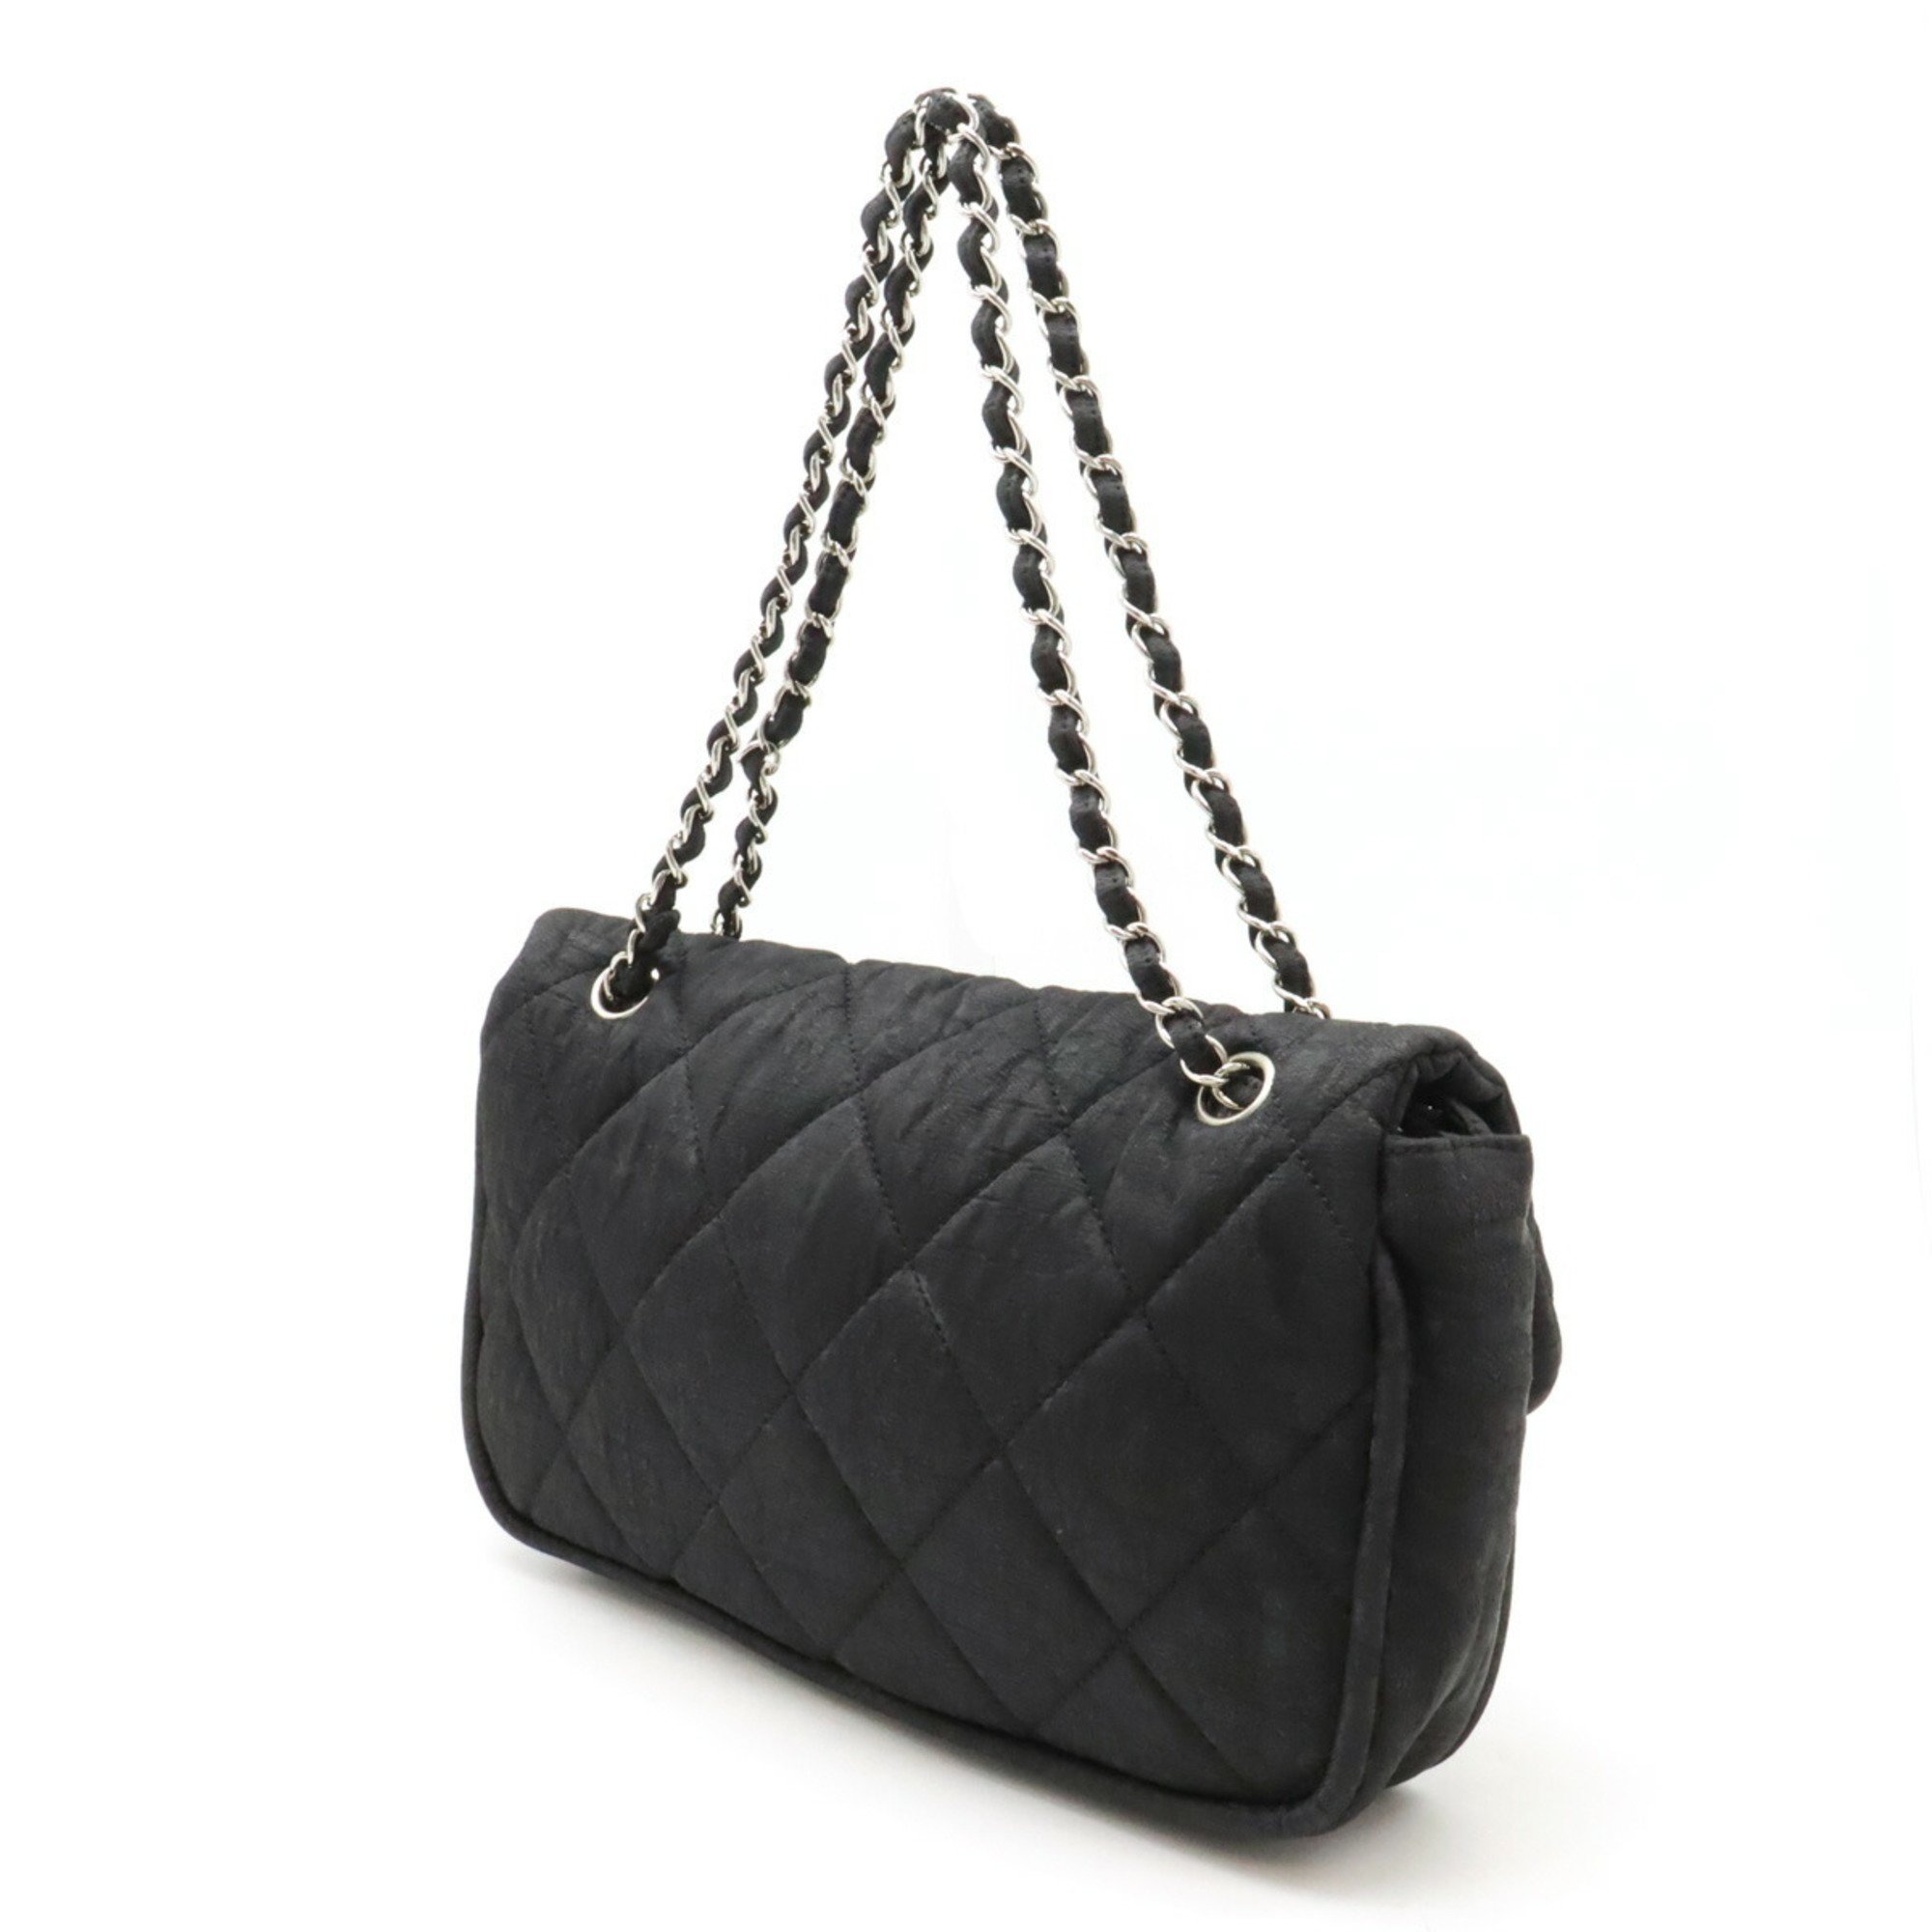 CHANEL Chanel Matelasse Coco Mark Chain Shoulder Bag W Double Coated Nylon Black A39078